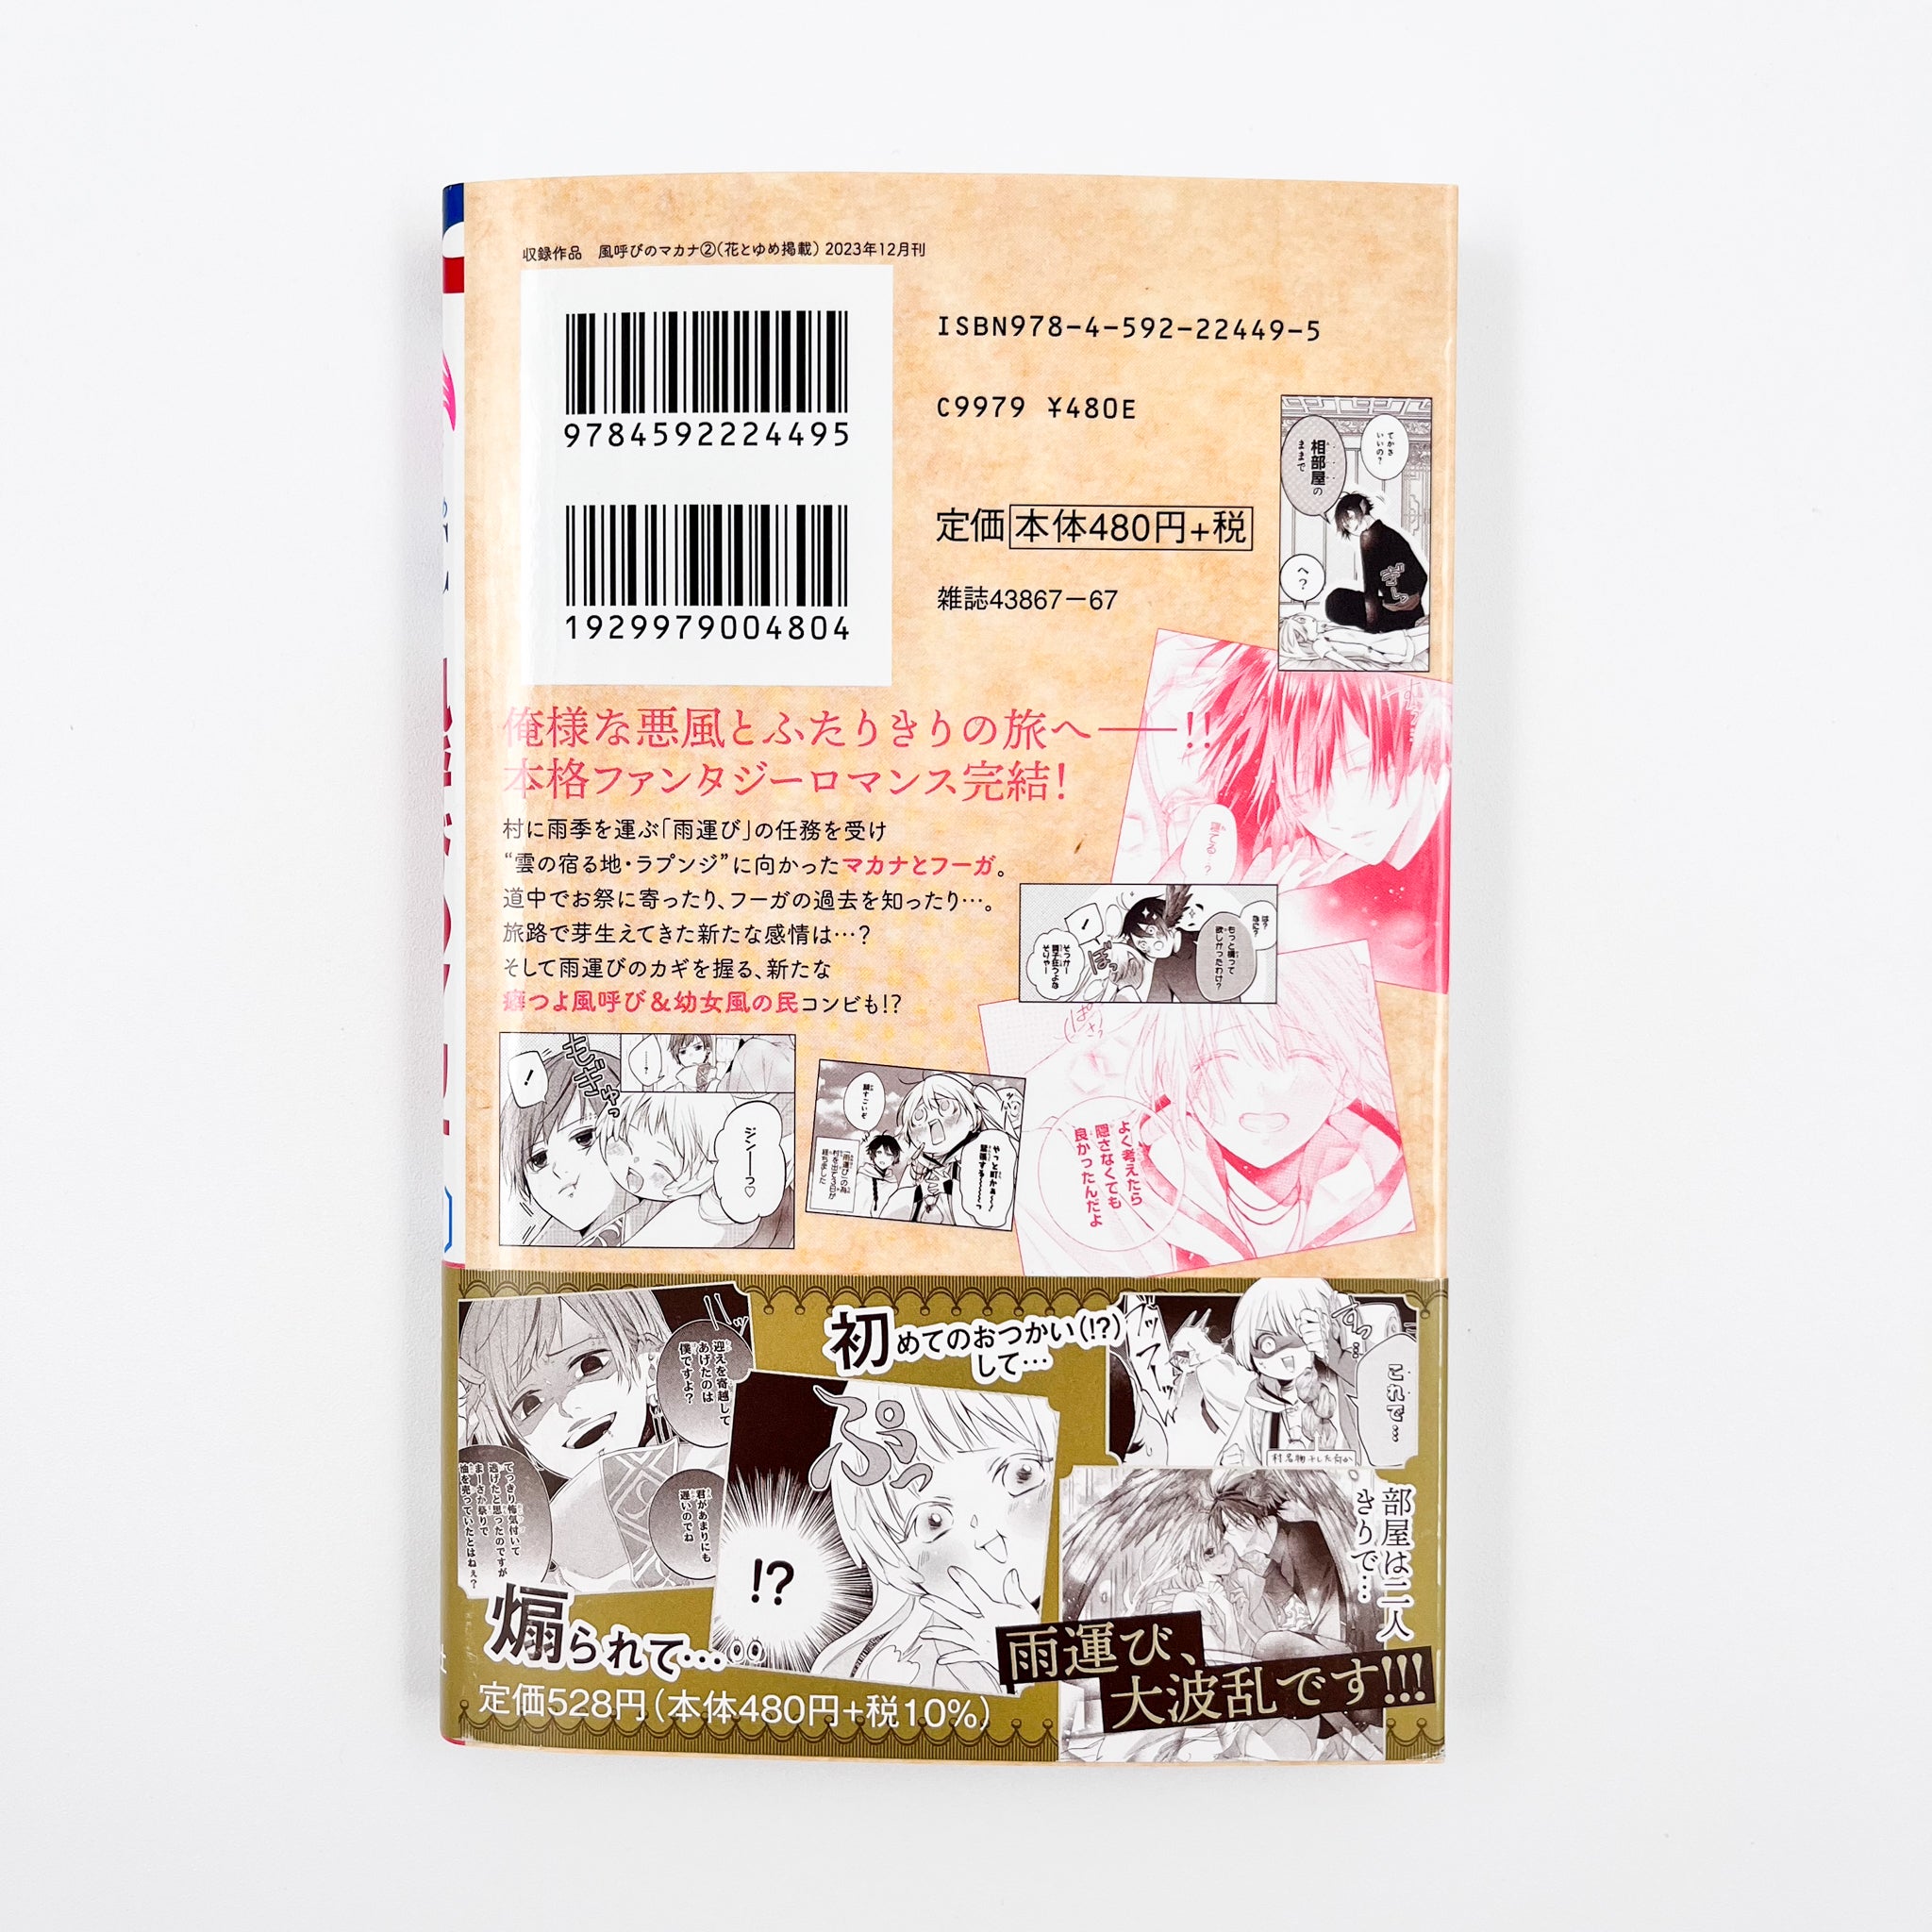 Kazeyobi no Makana, Volume 2 back cover